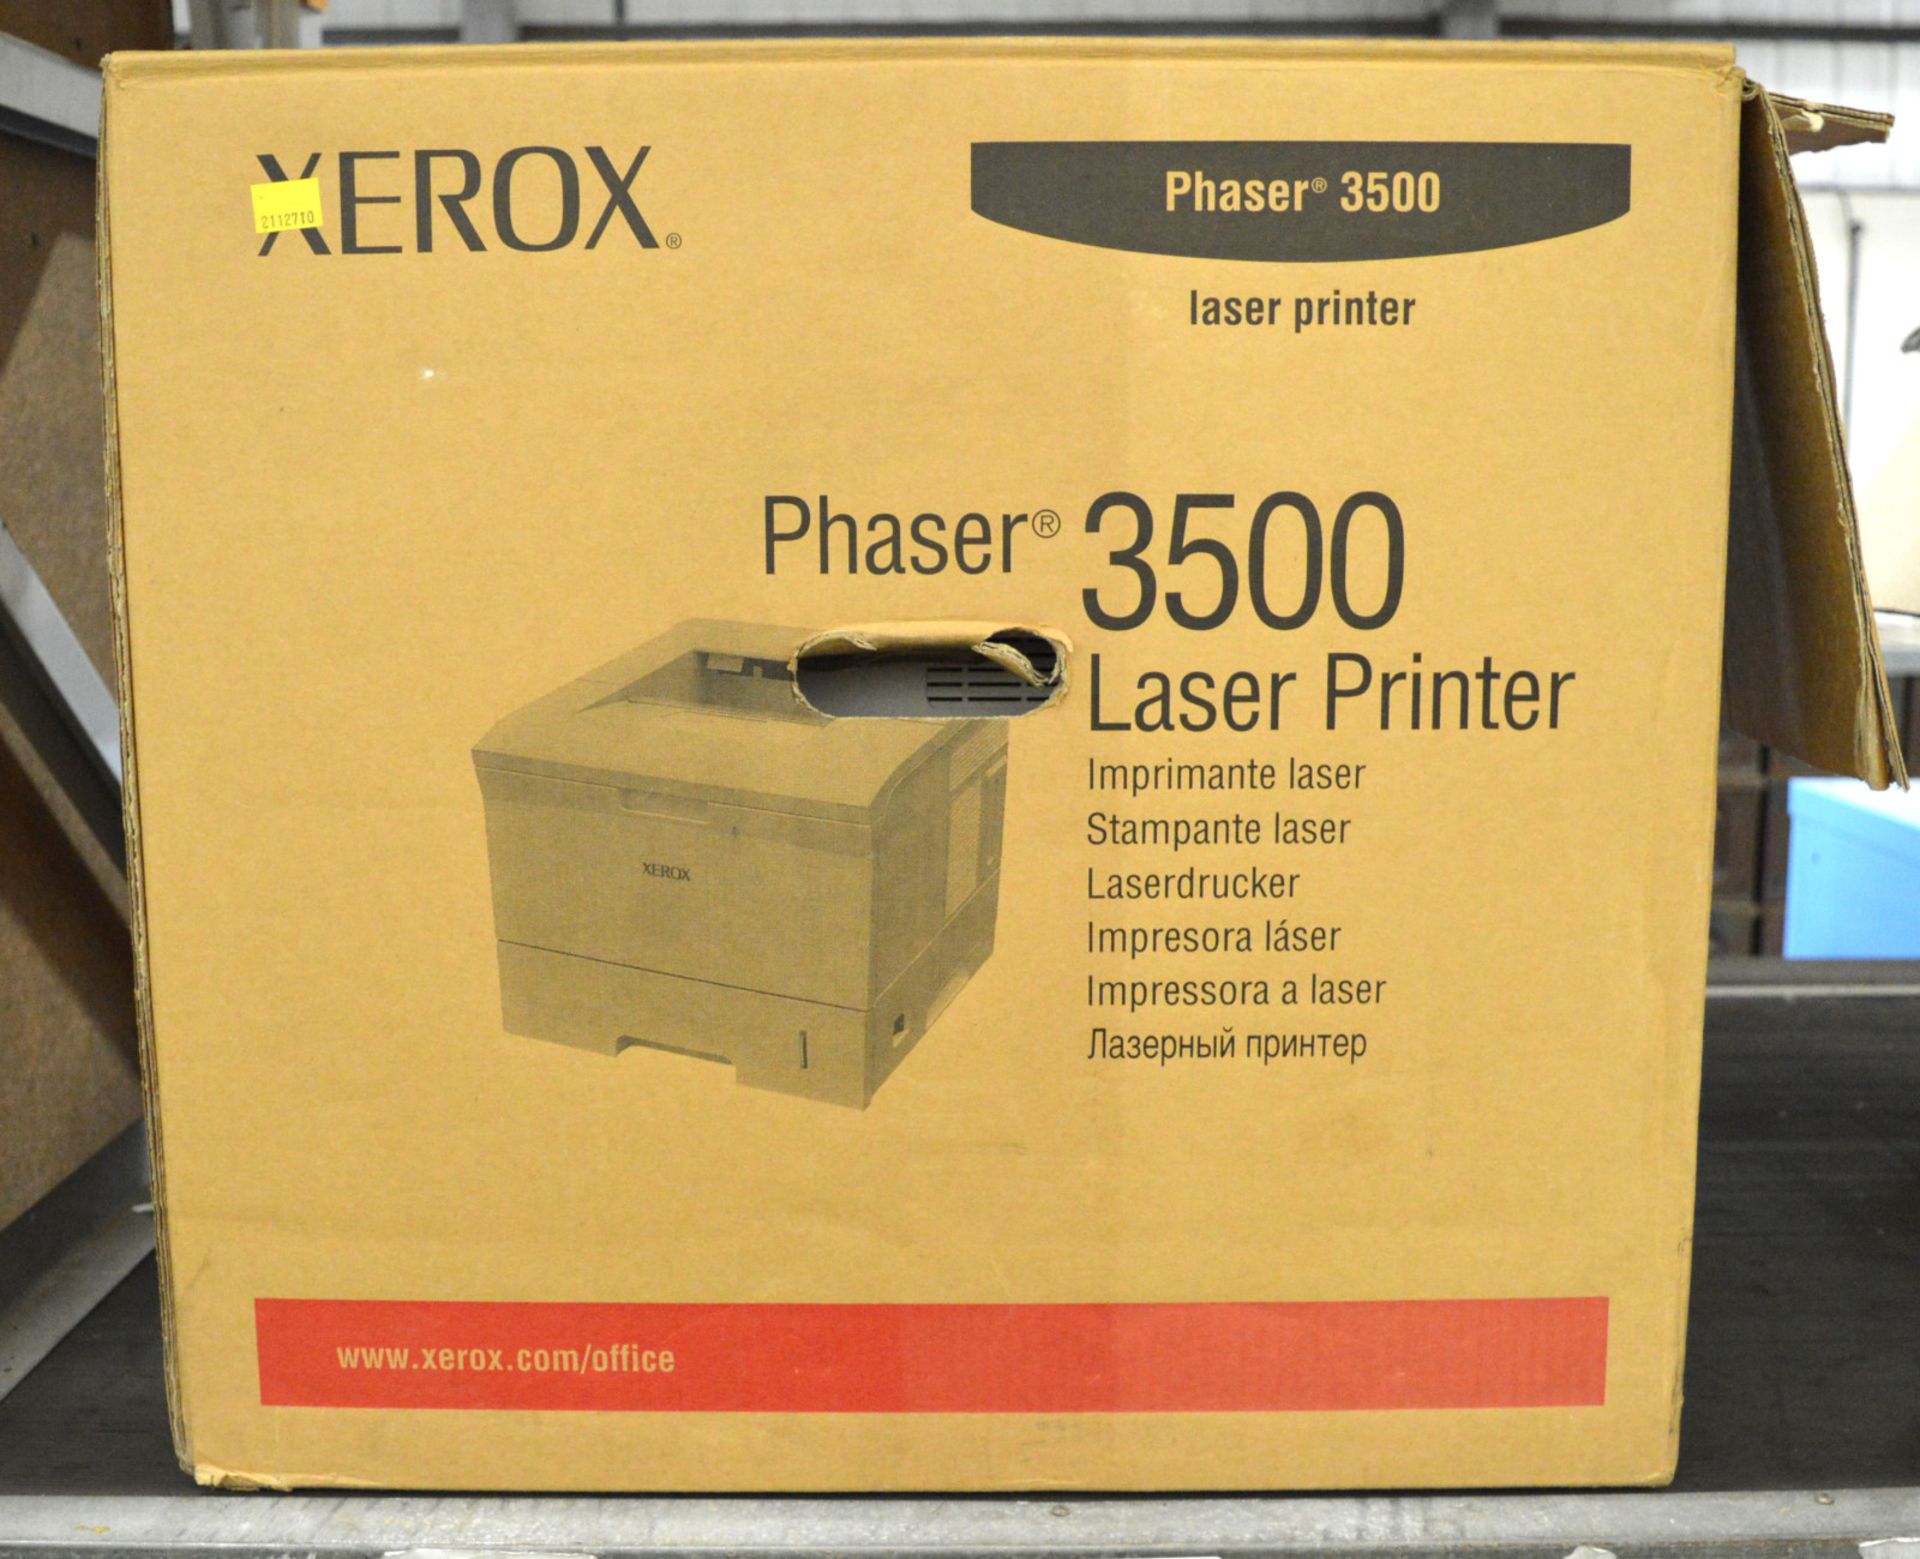 Xerox Phaser 3500 Laser Printer. - Image 6 of 6